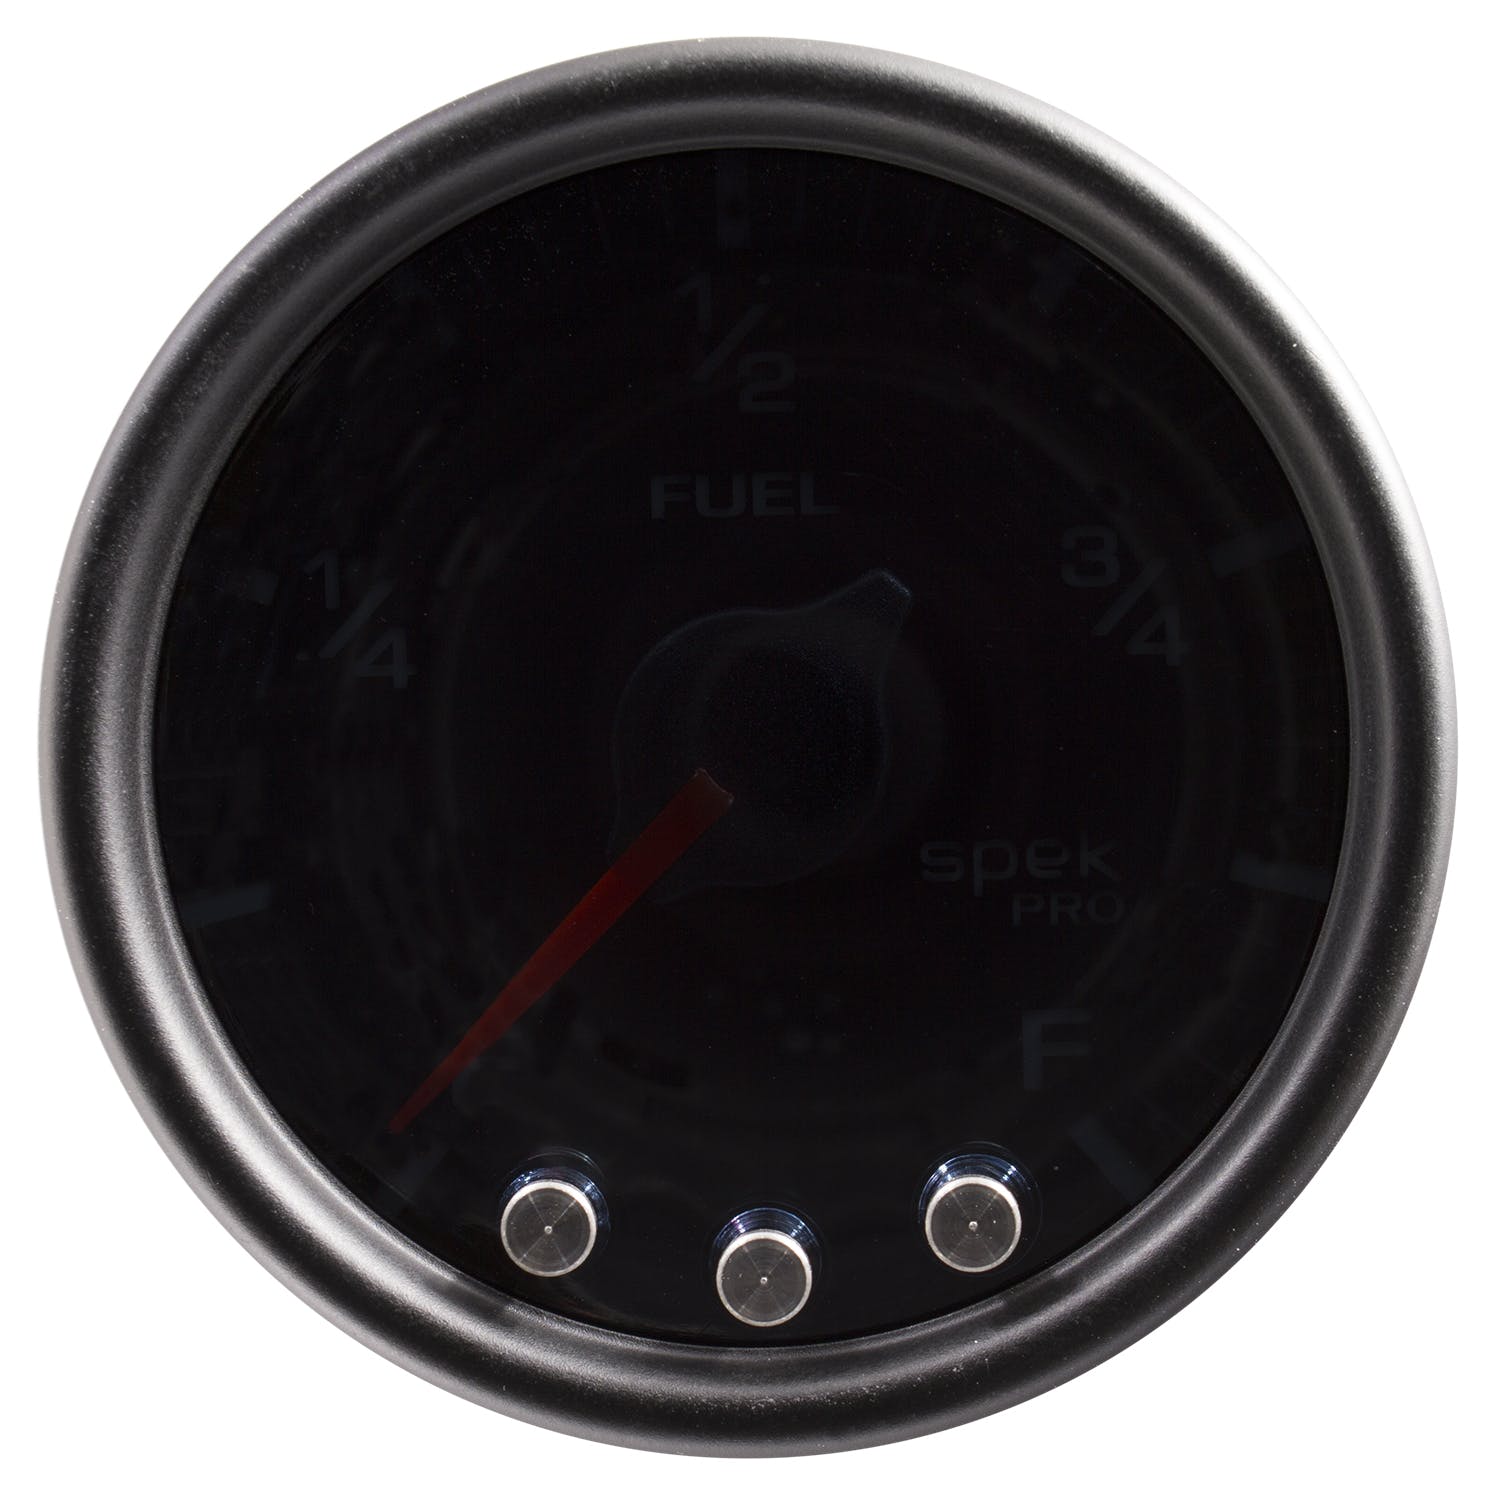 AutoMeter Products P31252 Spek Pro Fuel Level Gauge, 2 1/16, Programmable Black/Smoke/Black